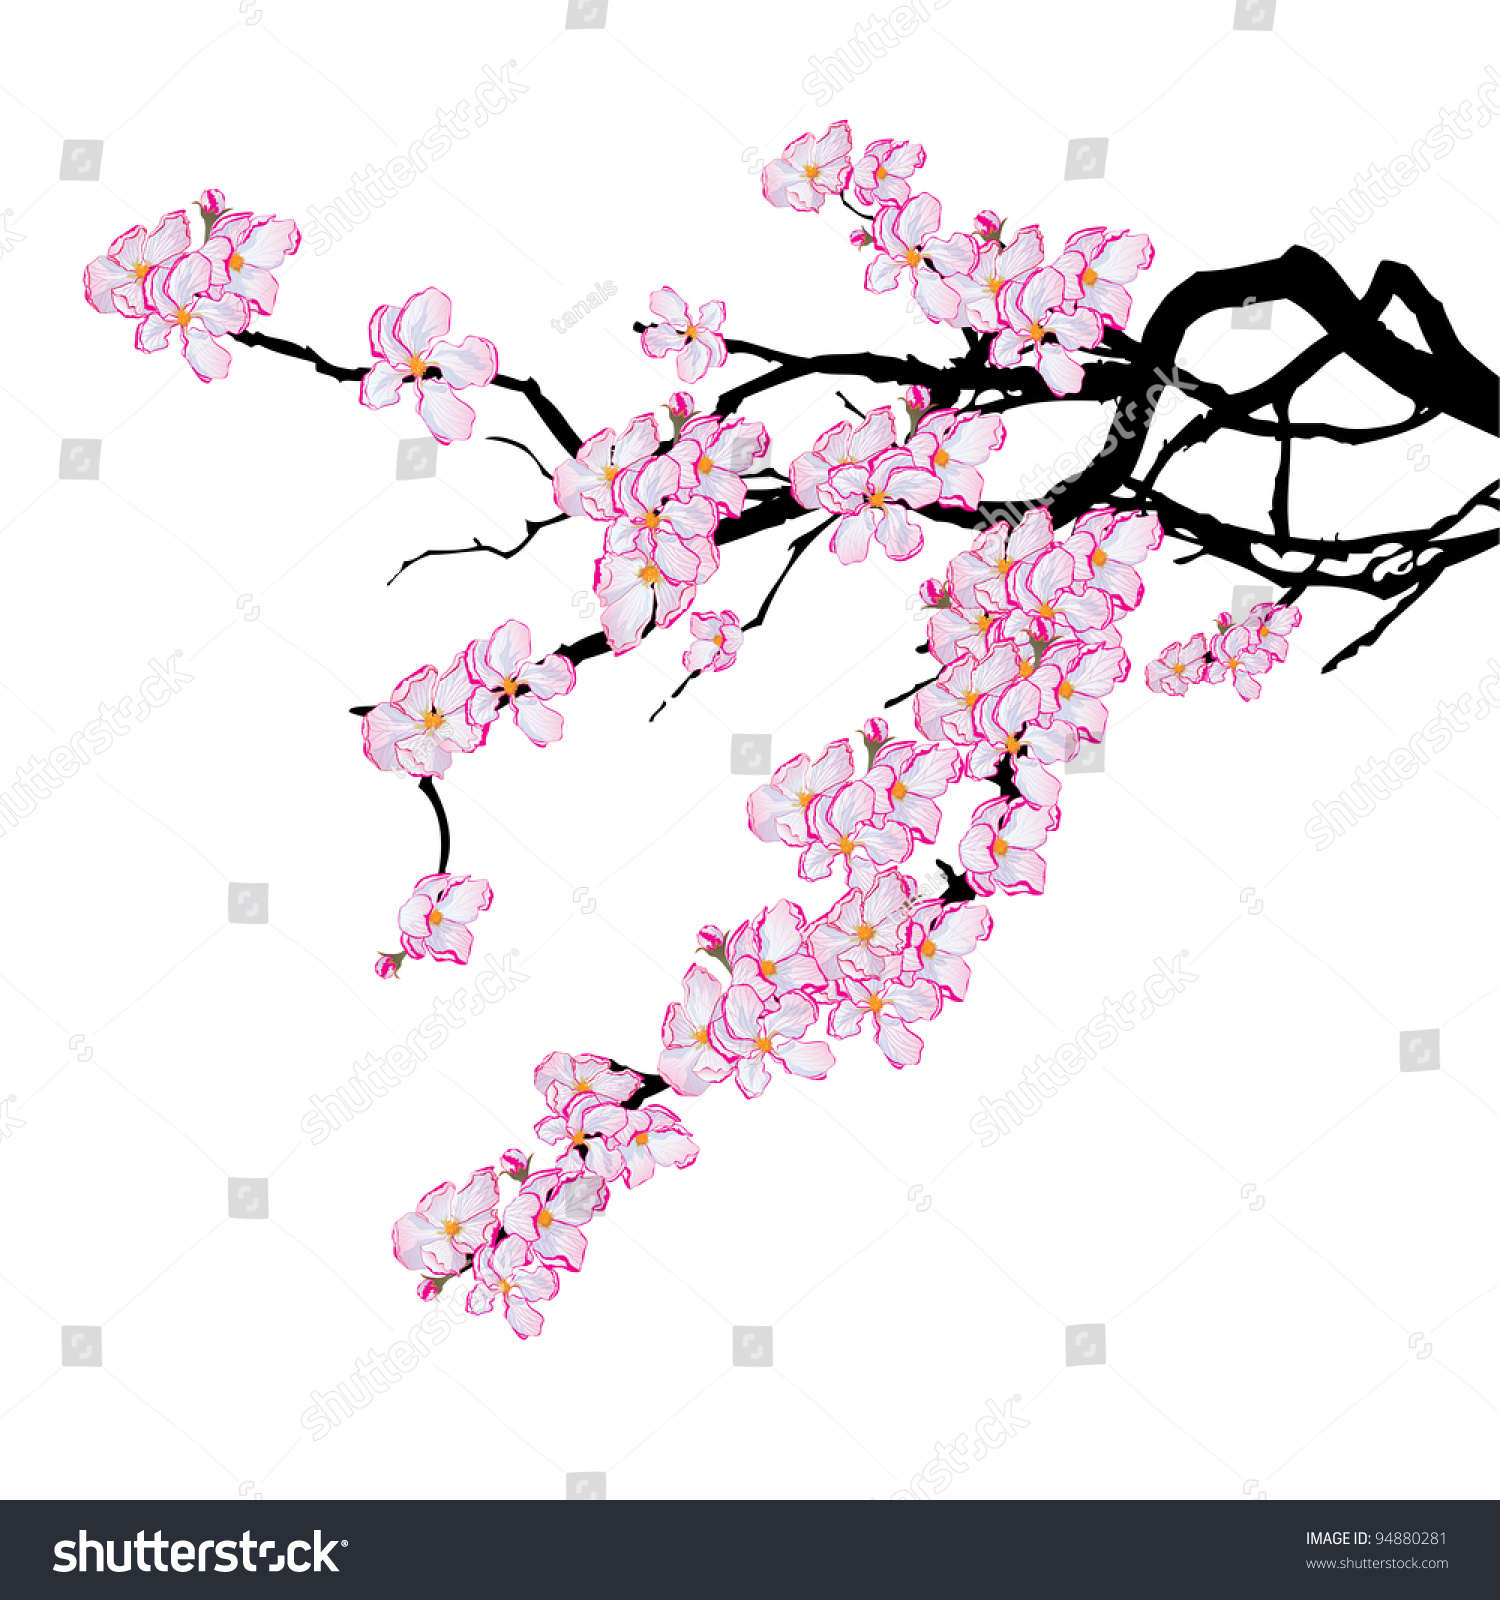 Vector Illustration Of Branch Of Cherry Tree (Eps 10) - 94880281